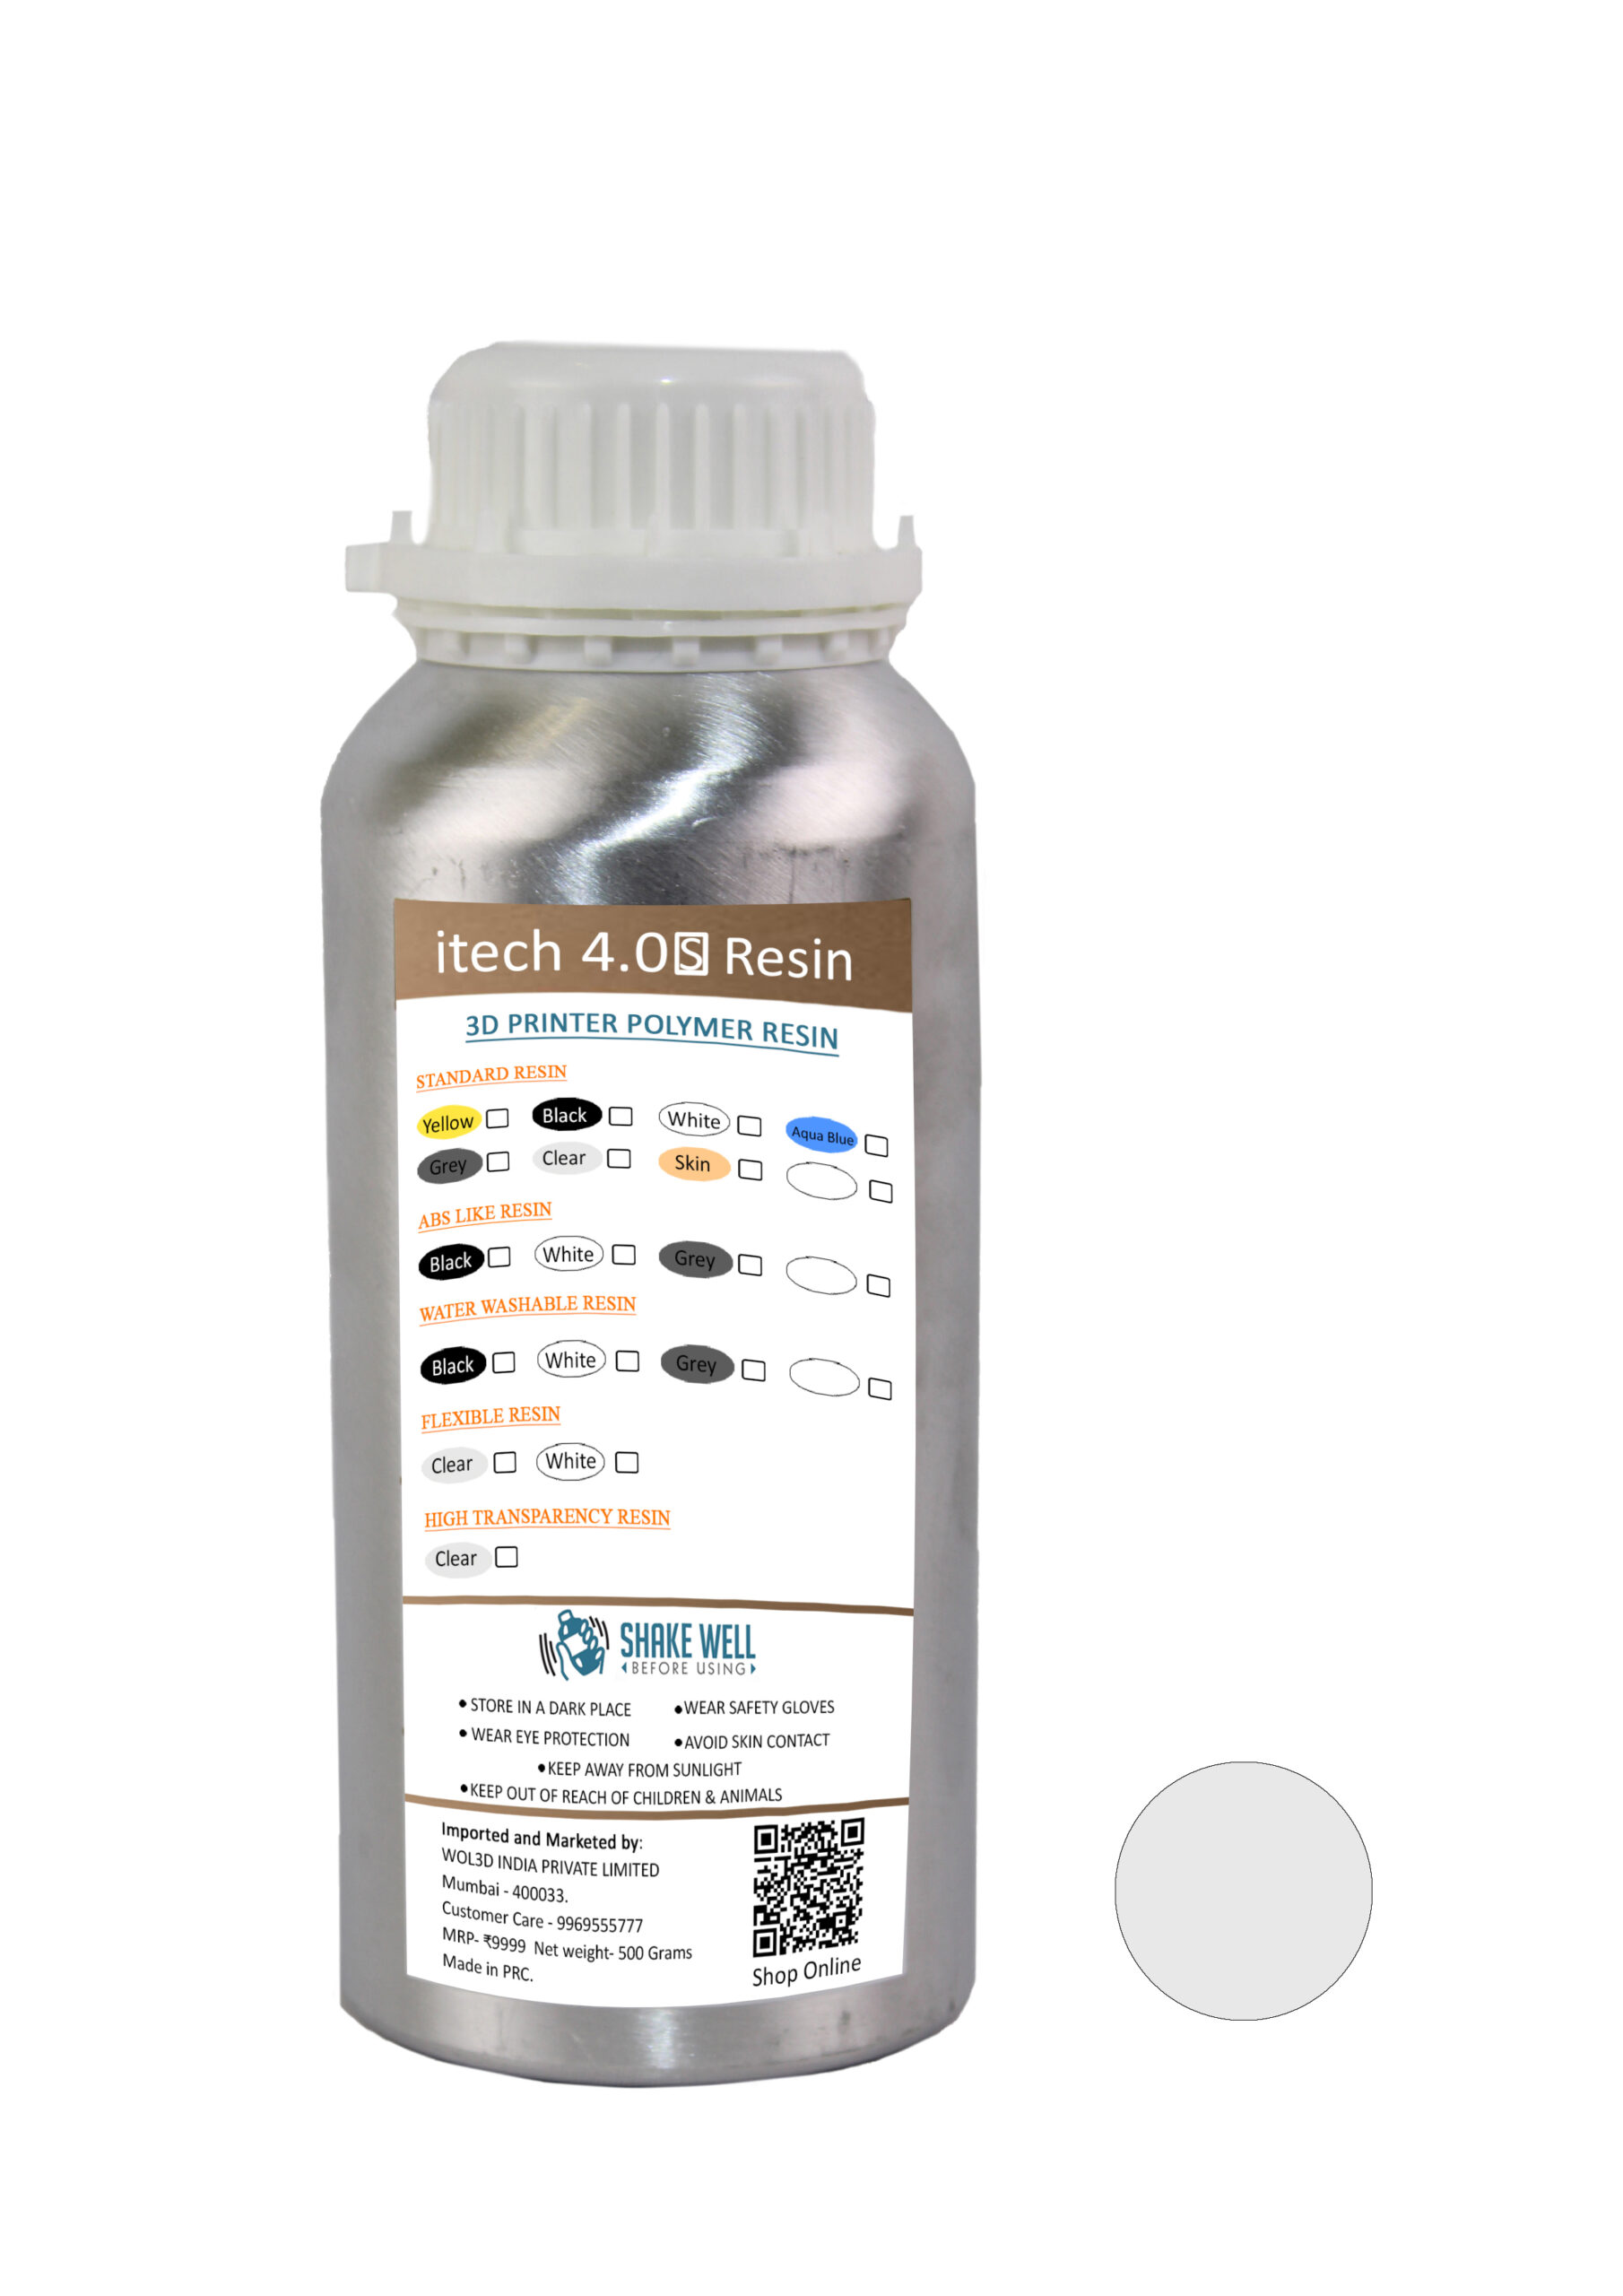 ANYCUBIC Résine UV 405nm - Transparent (Clear) - 500 Gr